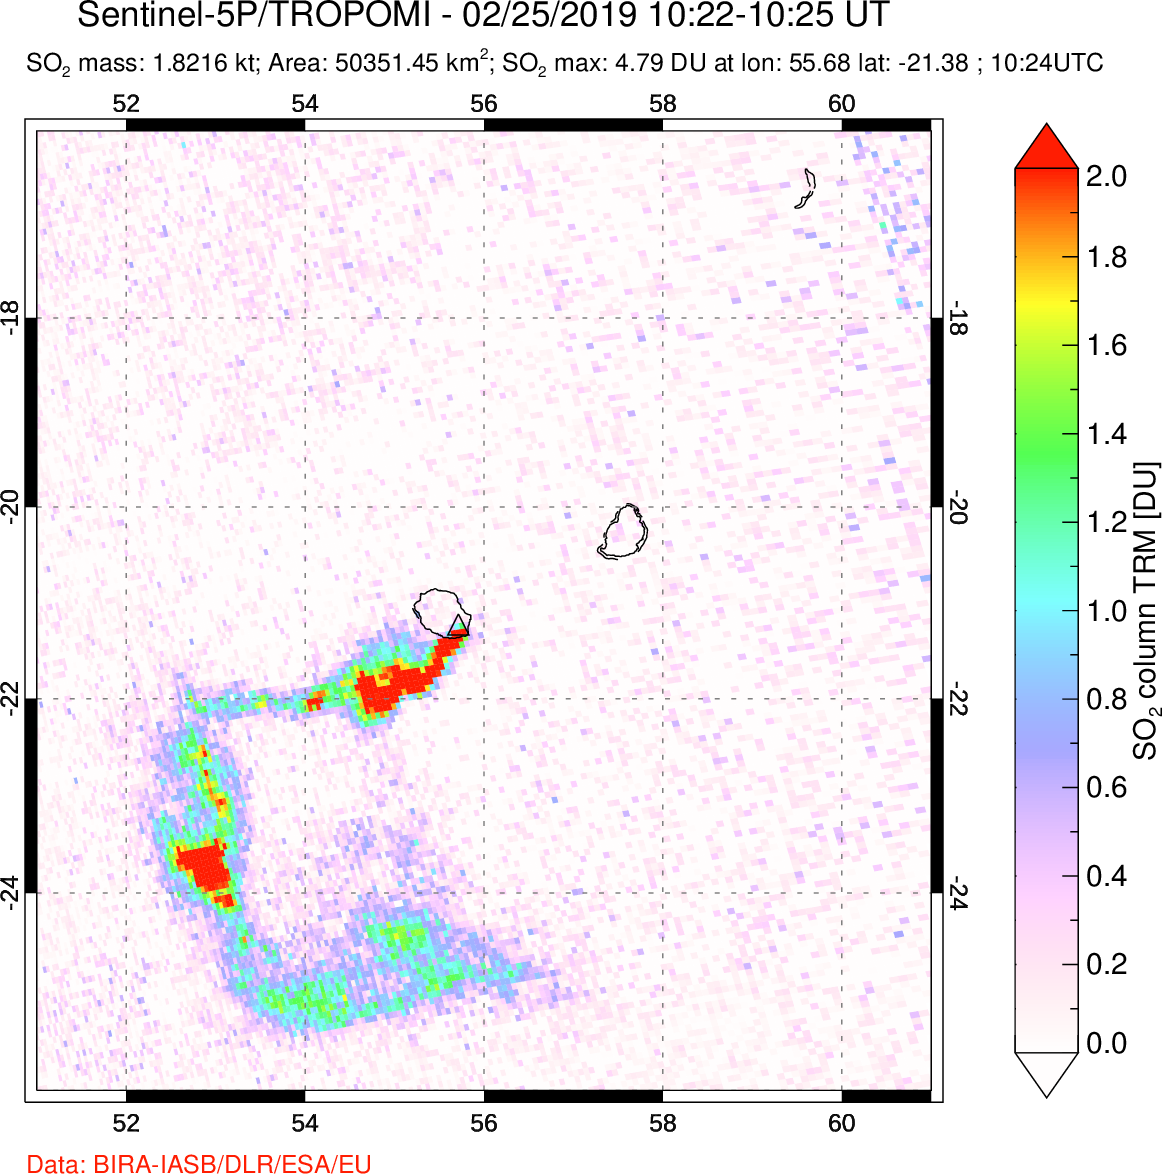 A sulfur dioxide image over Reunion Island, Indian Ocean on Feb 25, 2019.